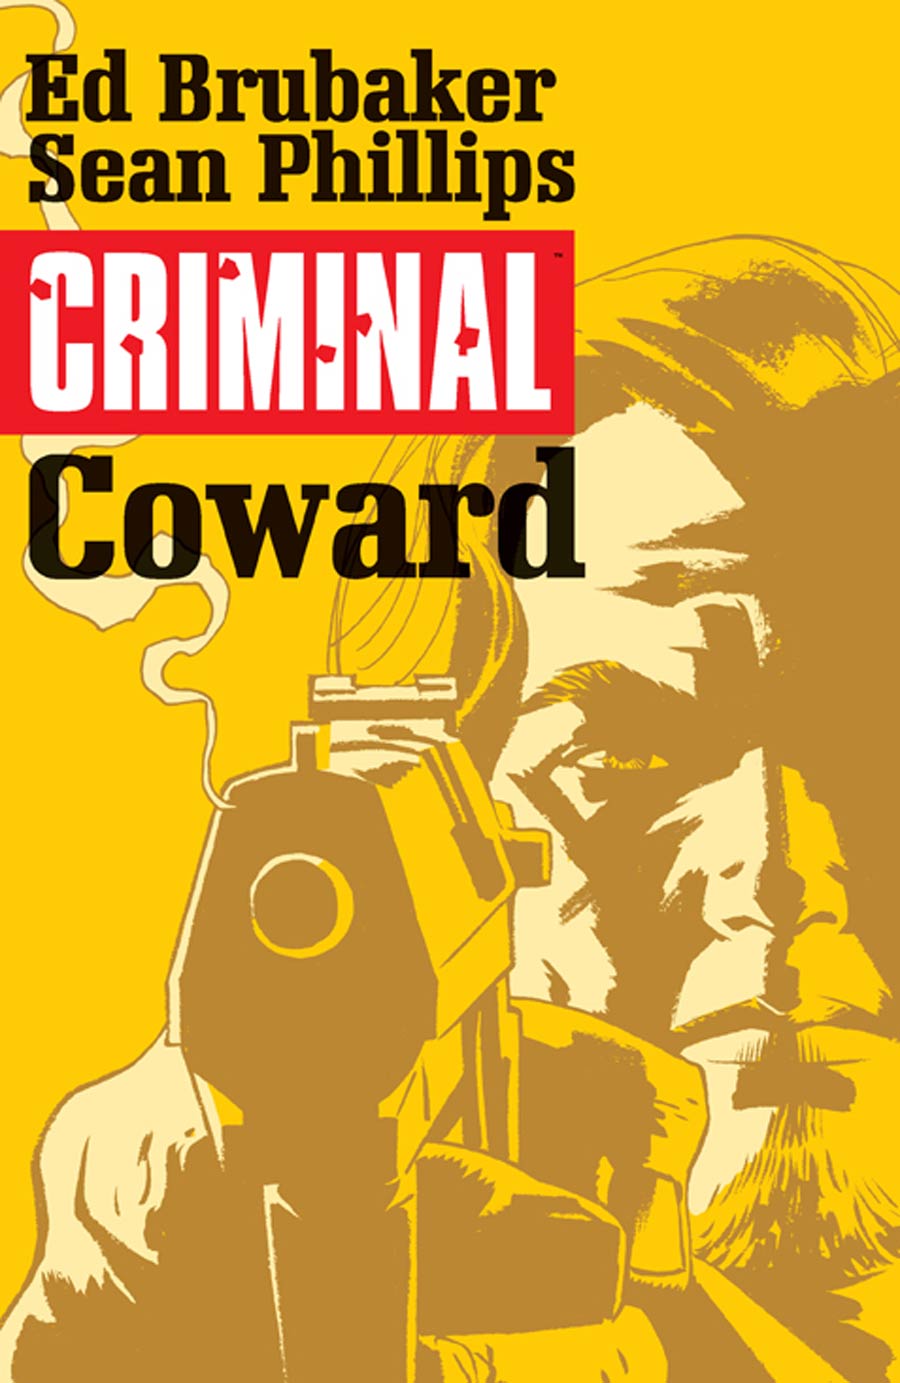 Criminal Vol 1 Coward TP Image Edition